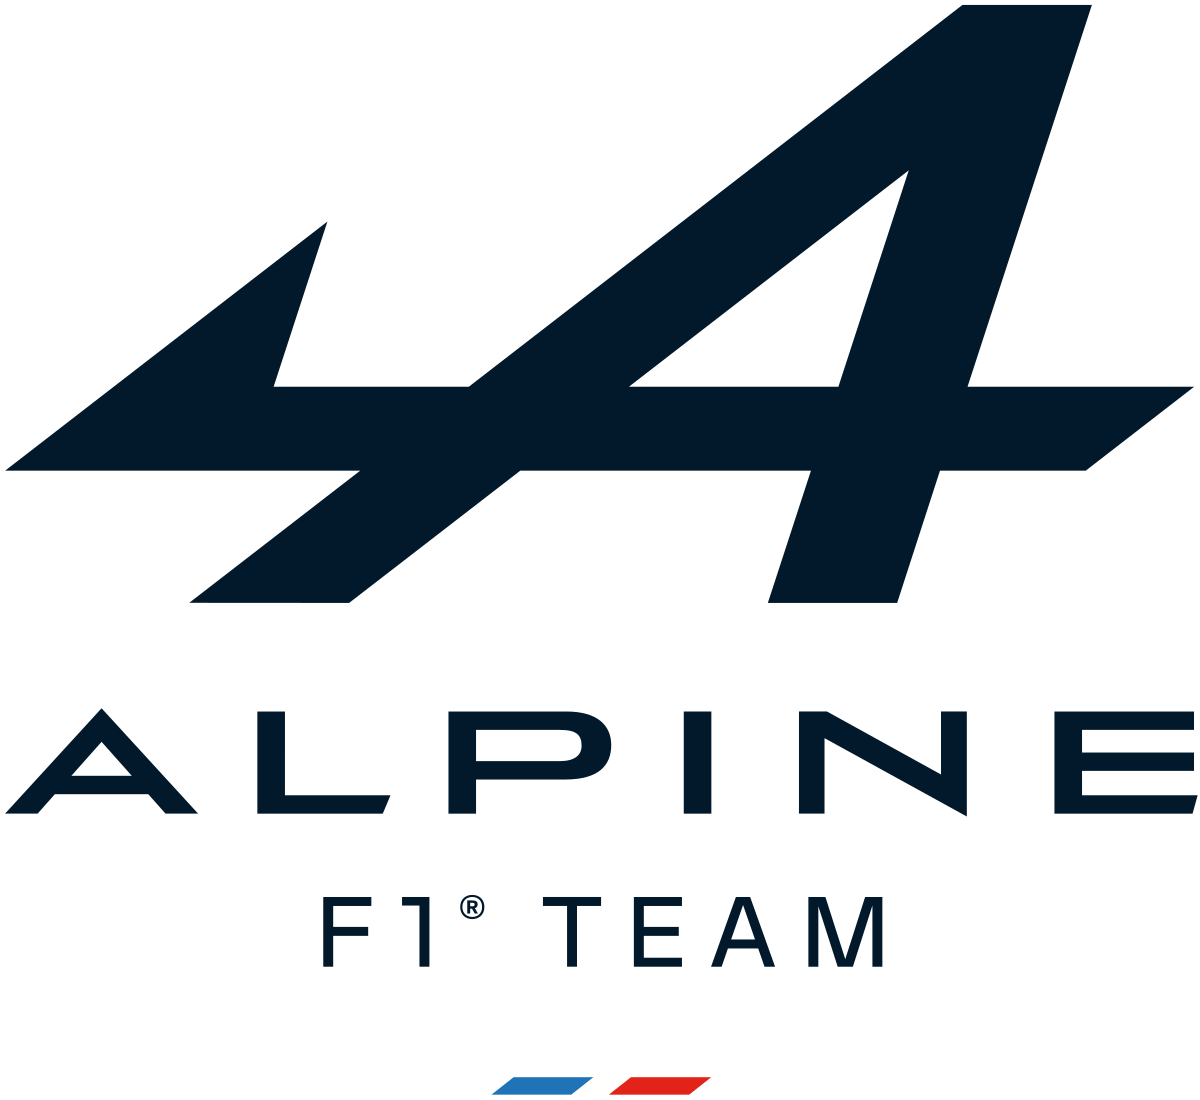 Alpine Racing